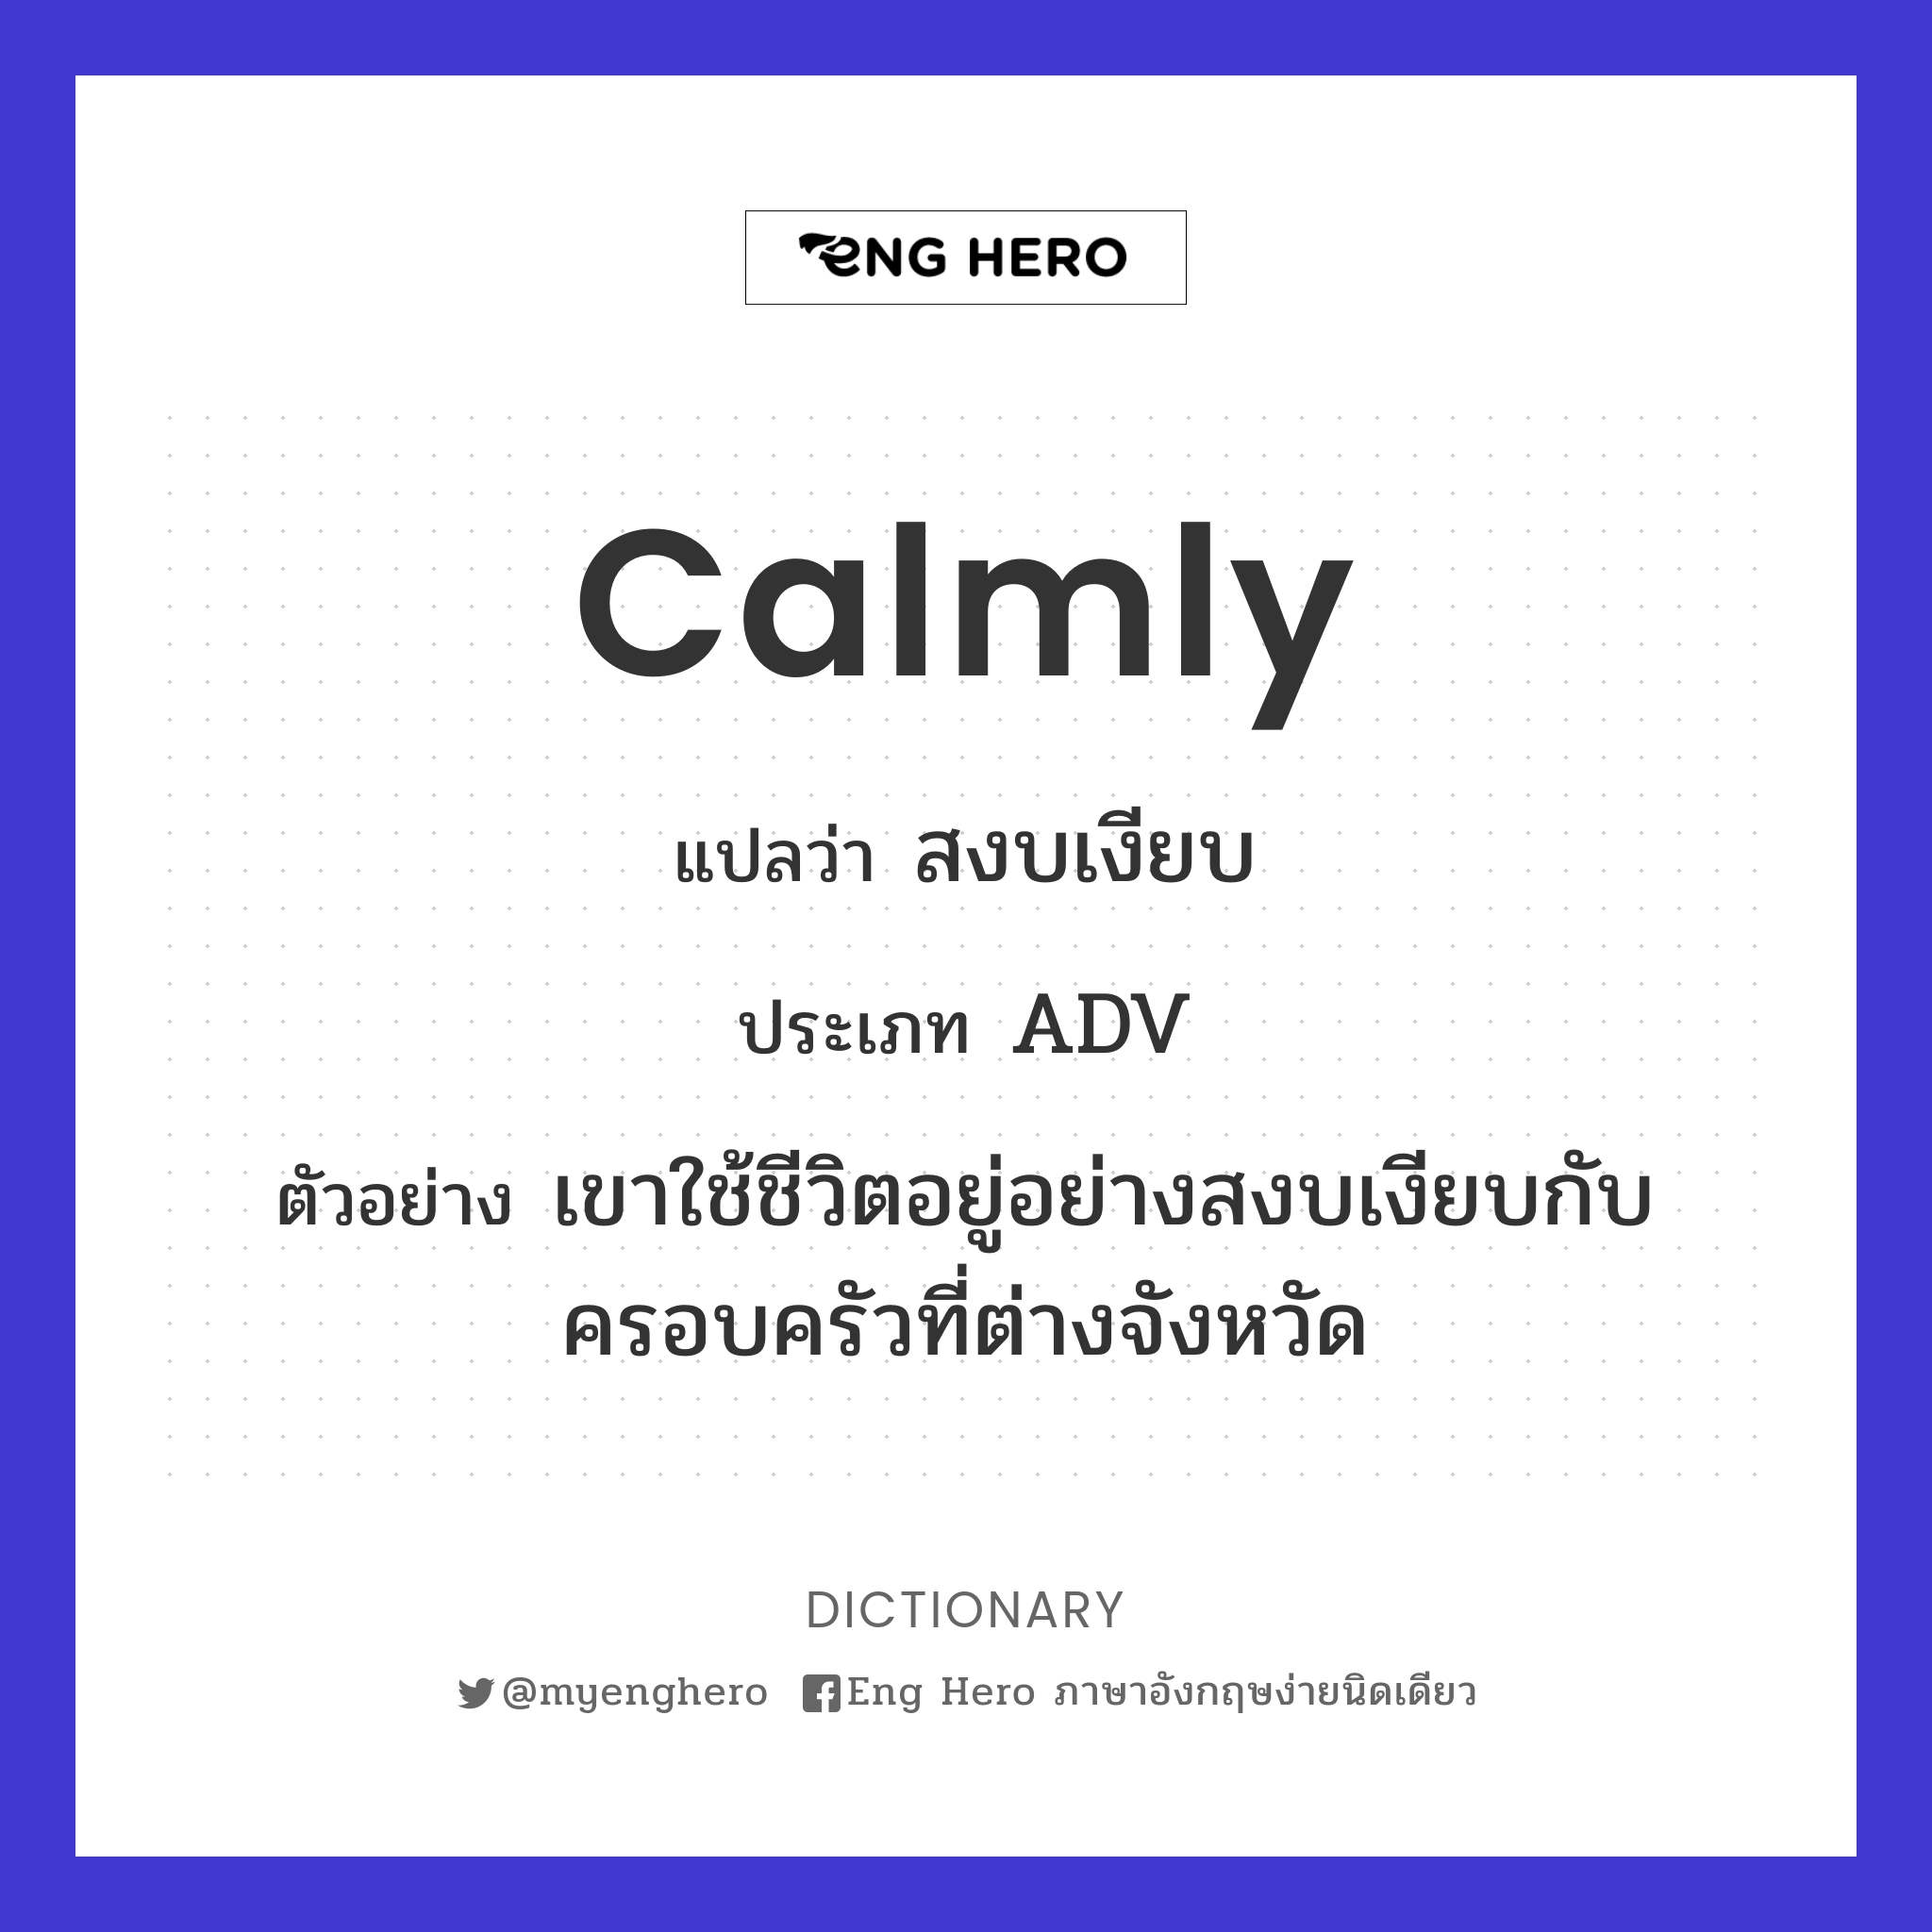 calmly